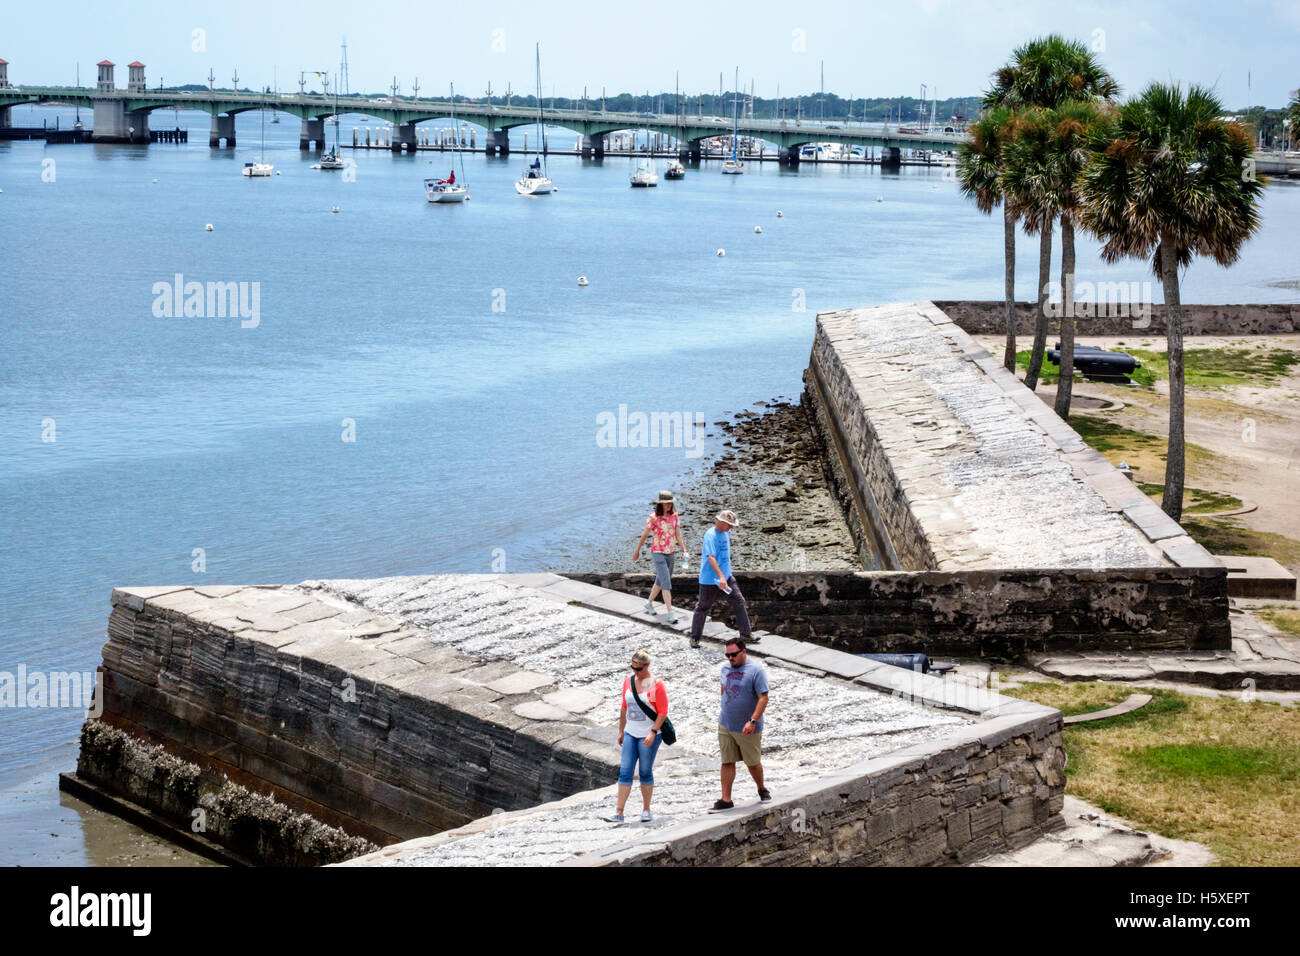 St. Saint Augustine Florida,Castillo de San Marcos National Monument,historic fort,Matanzas Bay water,palm trees,visitors travel traveling tour touris Stock Photo